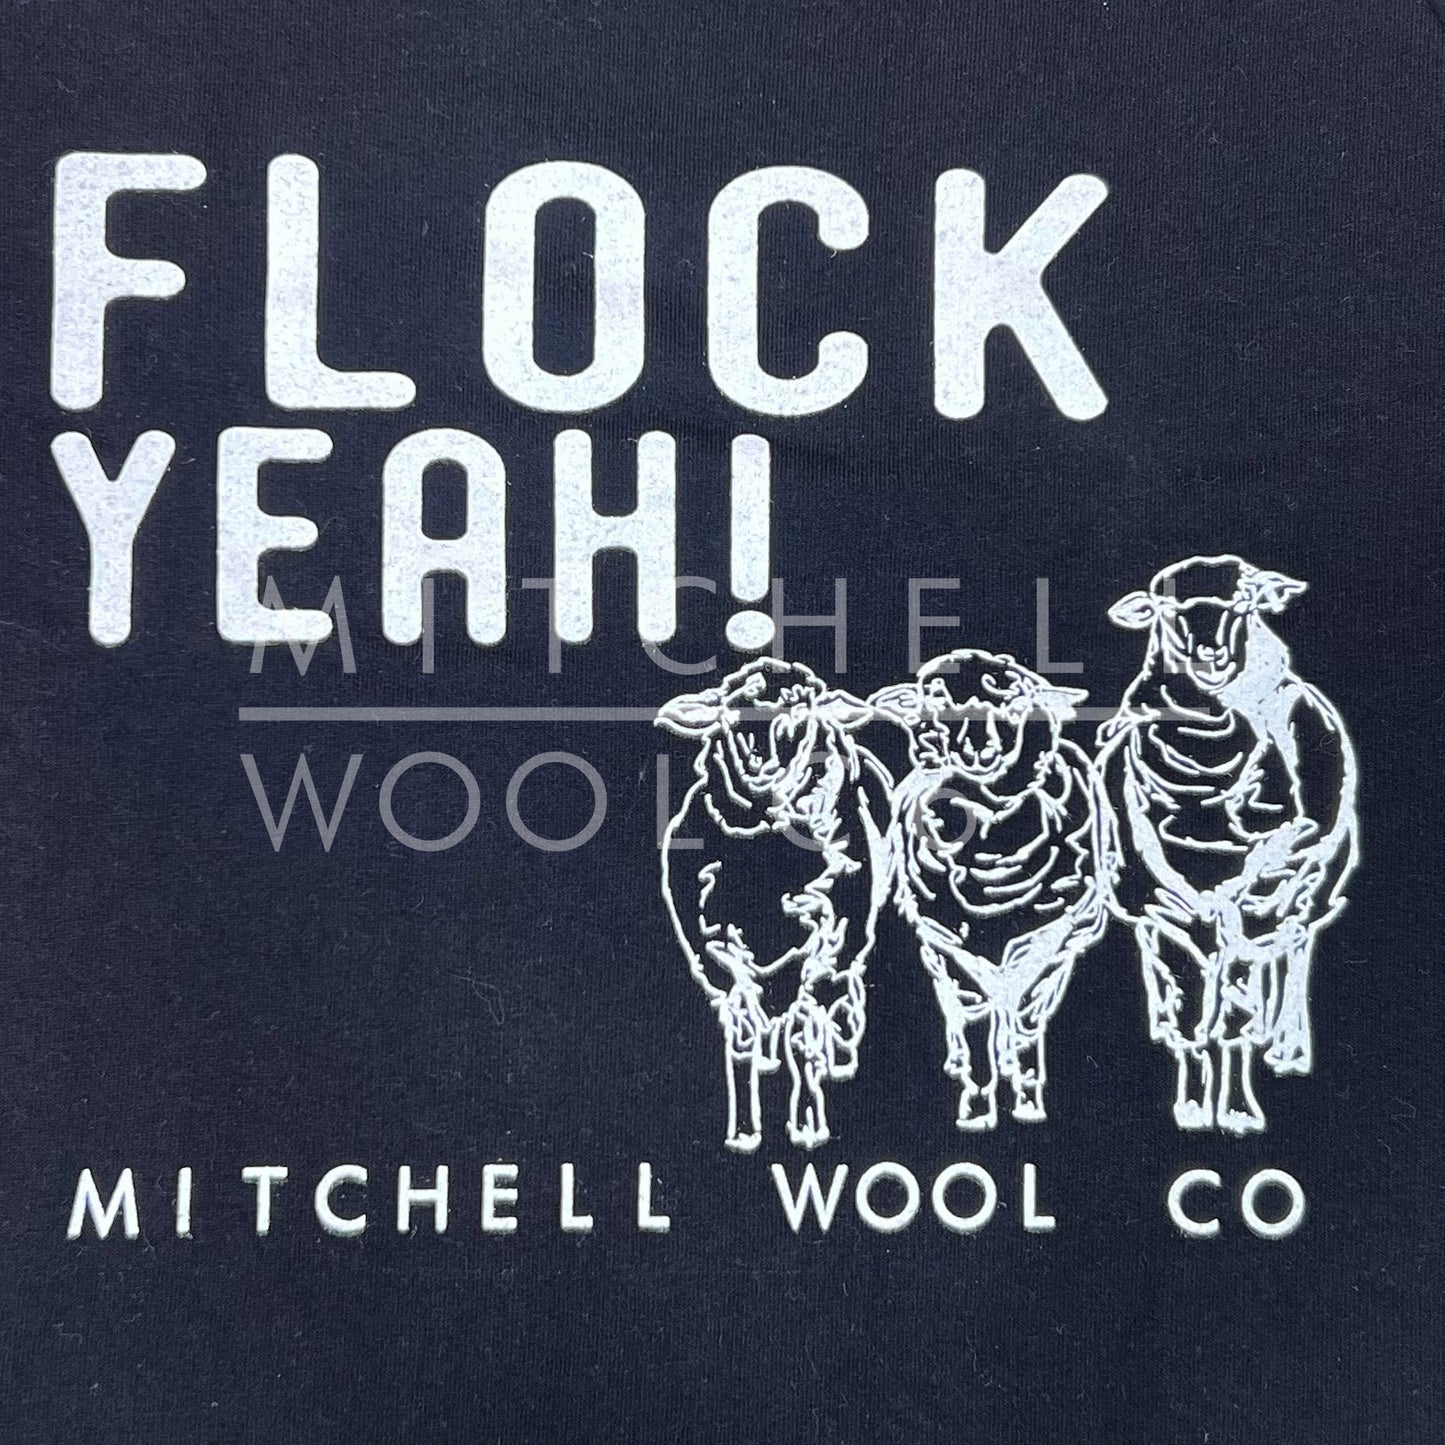 FLOCK YEAH! - Organic Cotton Tee Shirt